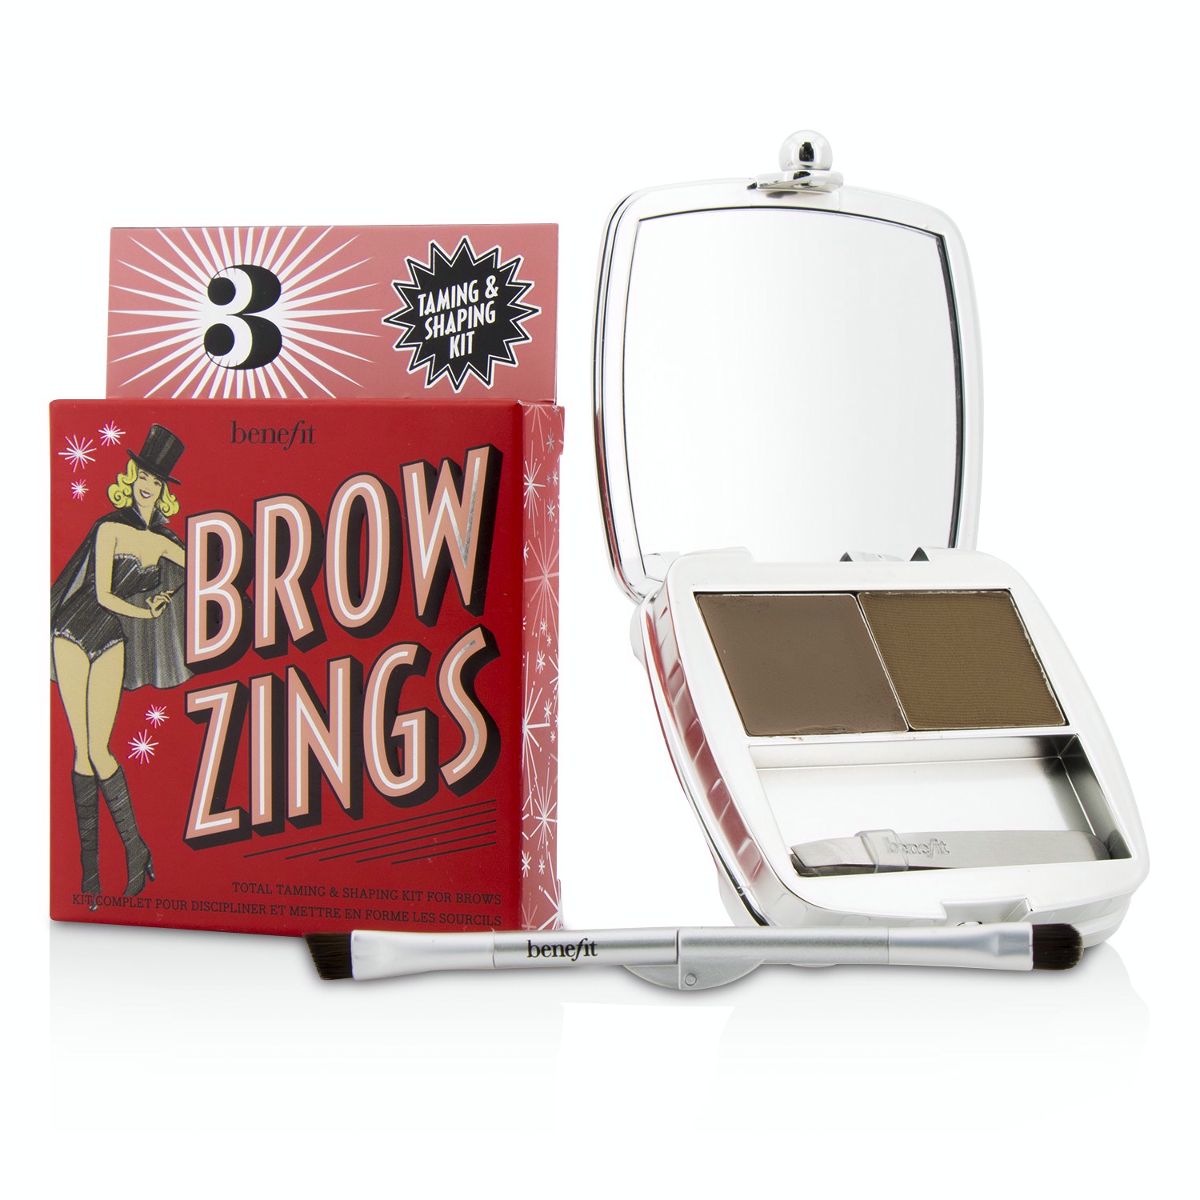 Brow Zings (Total Taming  Shaping Kit For Brows) - #3 (Medium) Benefit Image